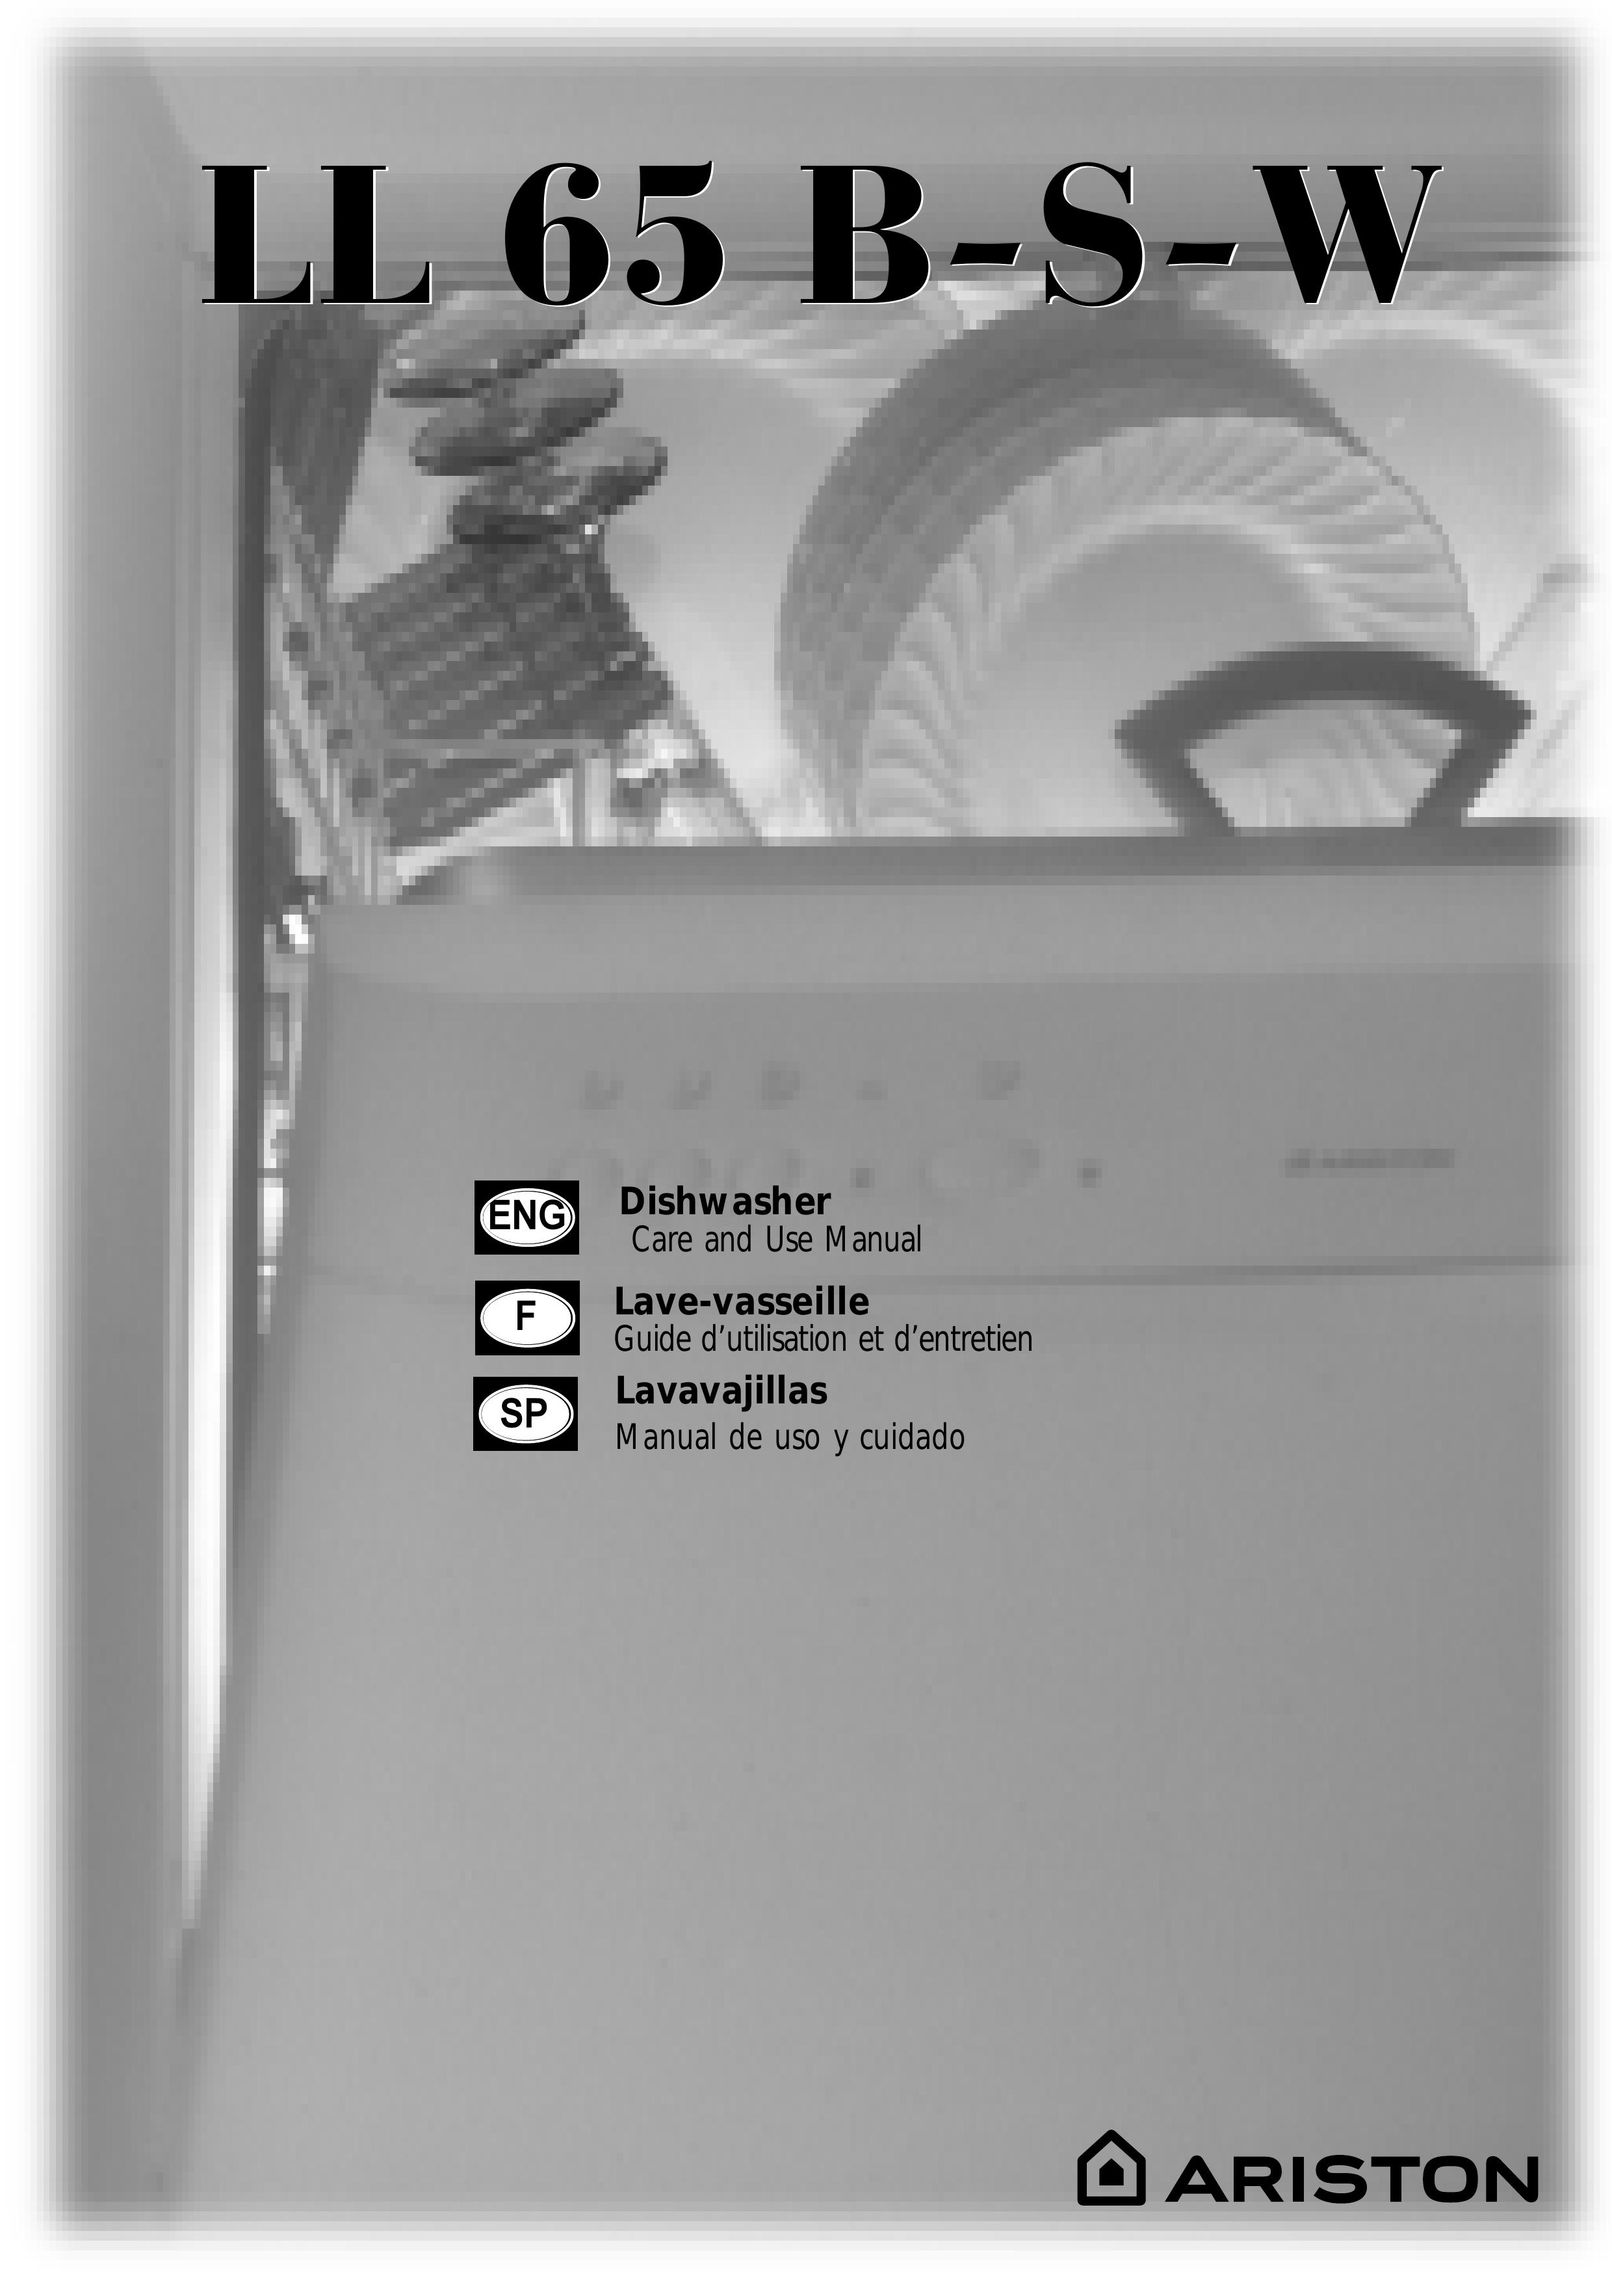 Ariston LL 65 B-S-W Dishwasher User Manual